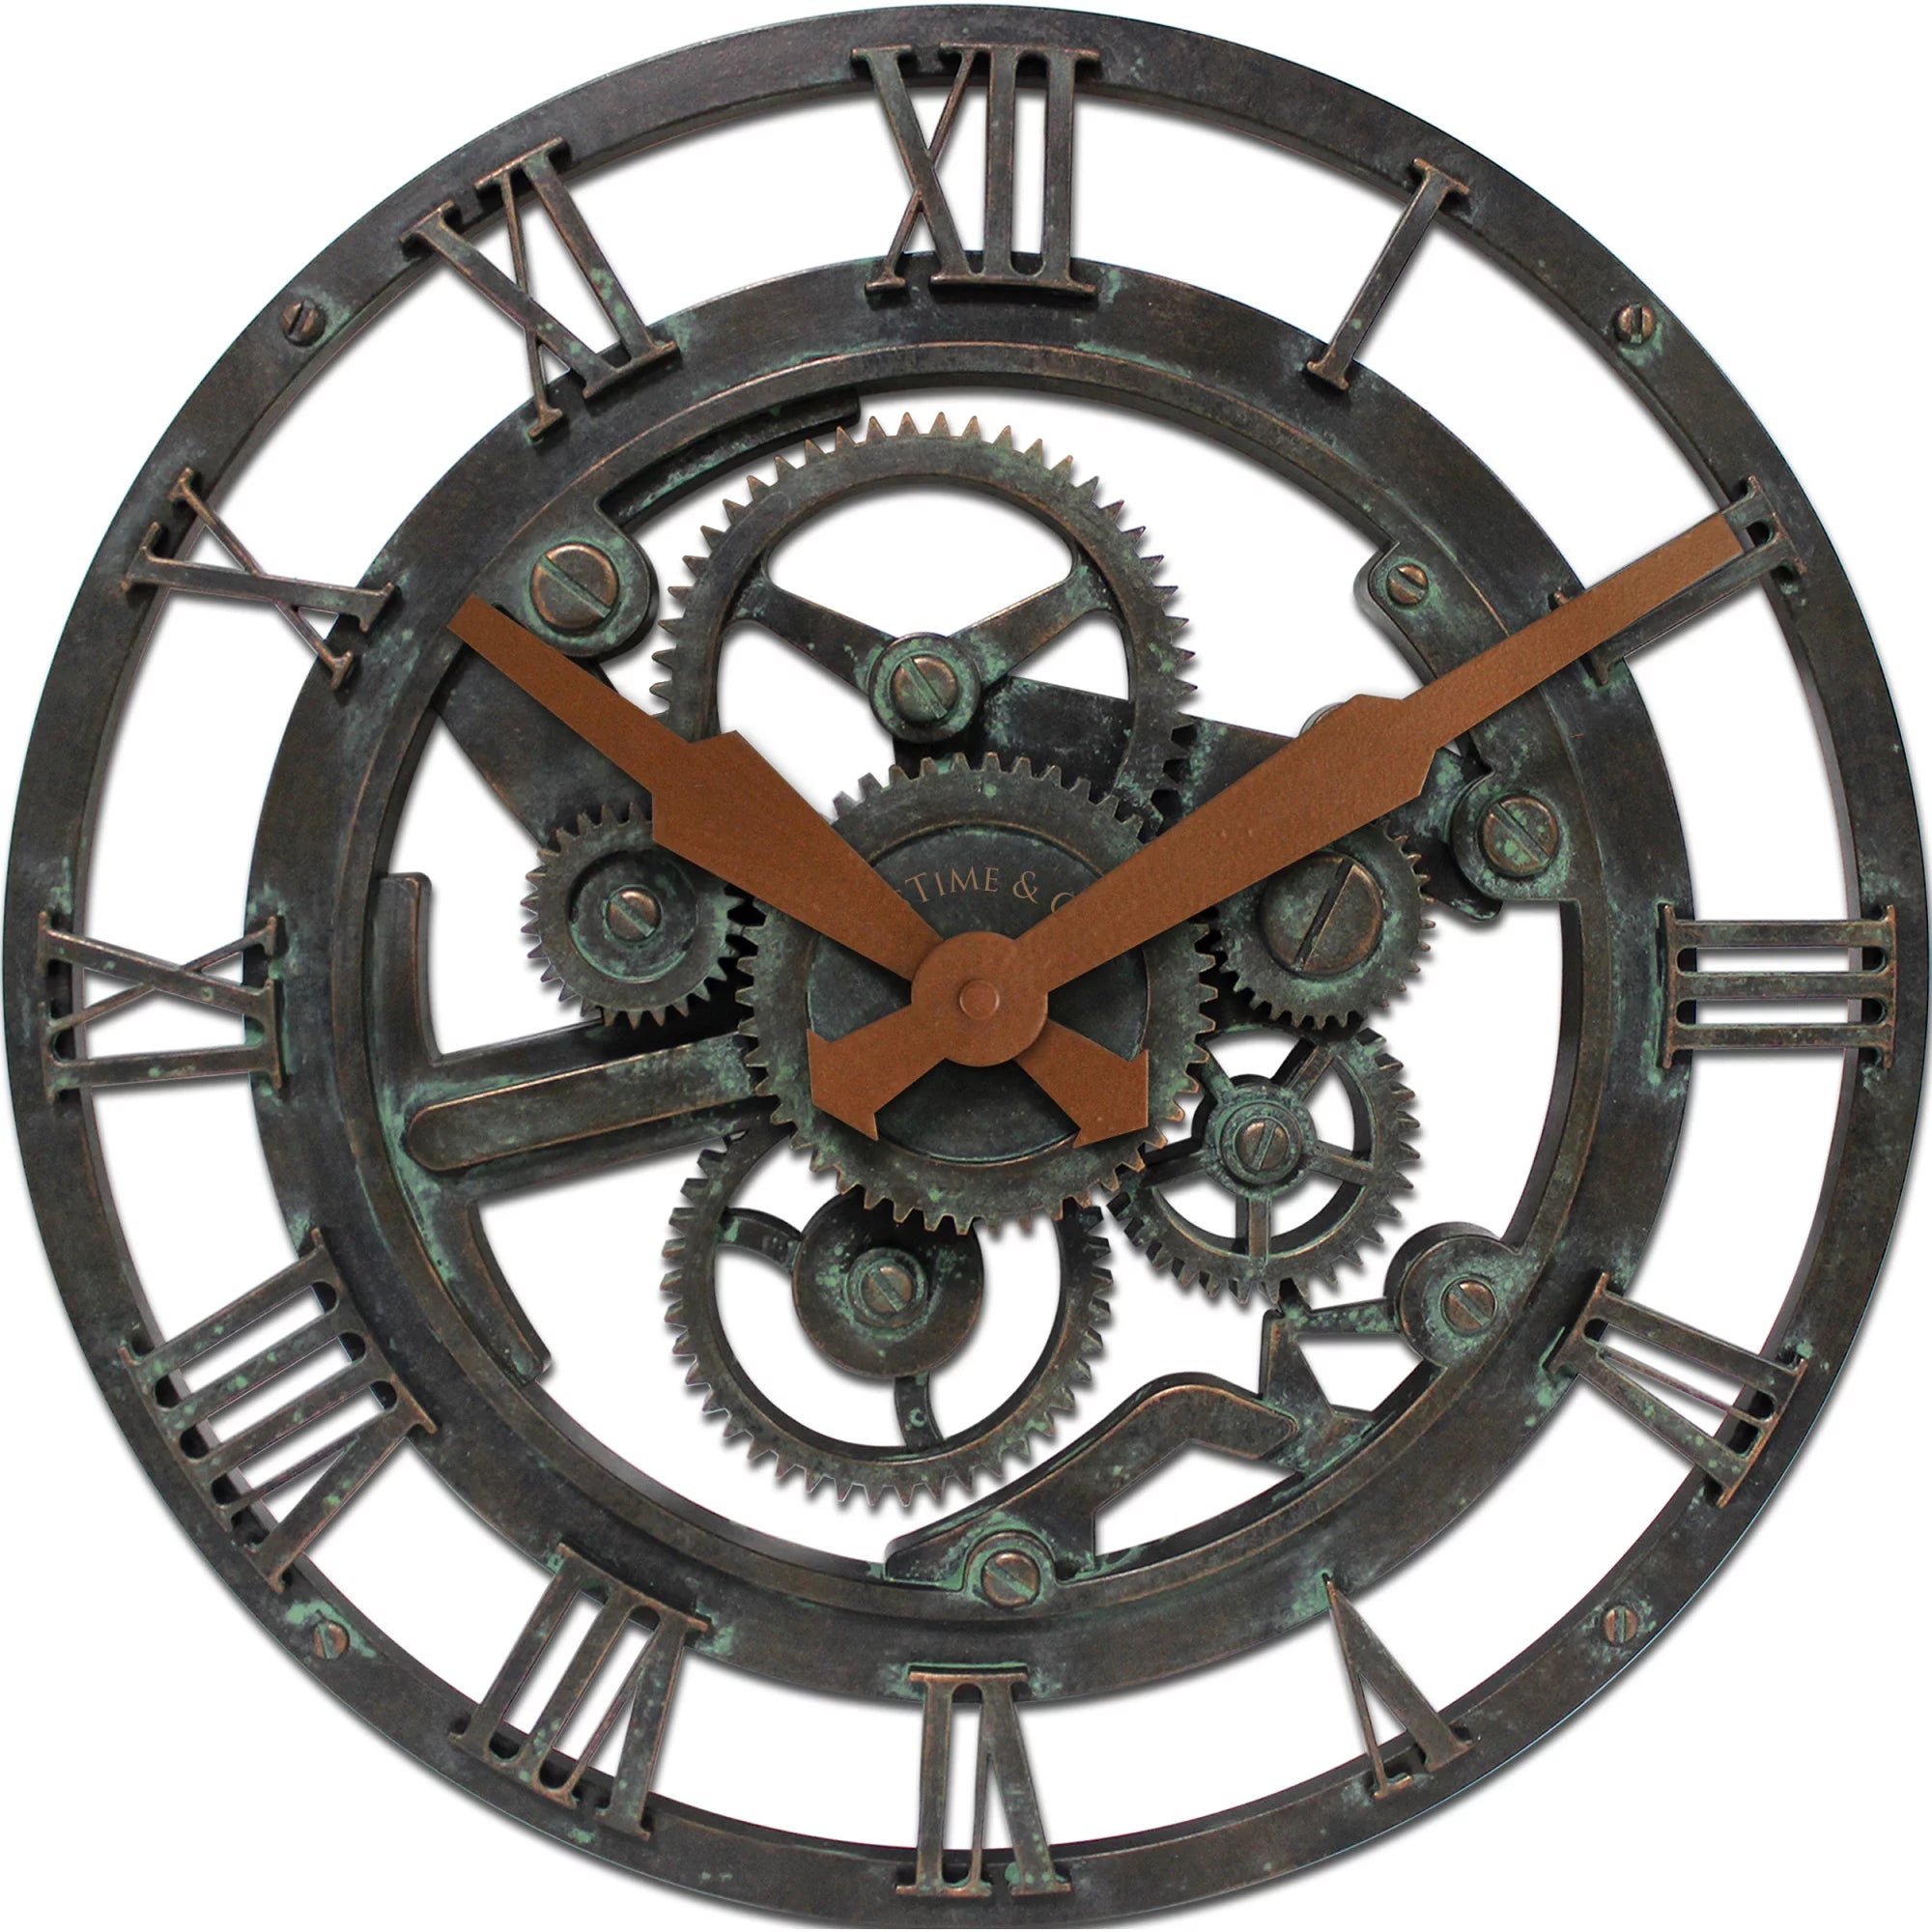 Verdigris Oxidized Gears Wall Clock, Industrial, Analog, 15 x 2 x 15 in